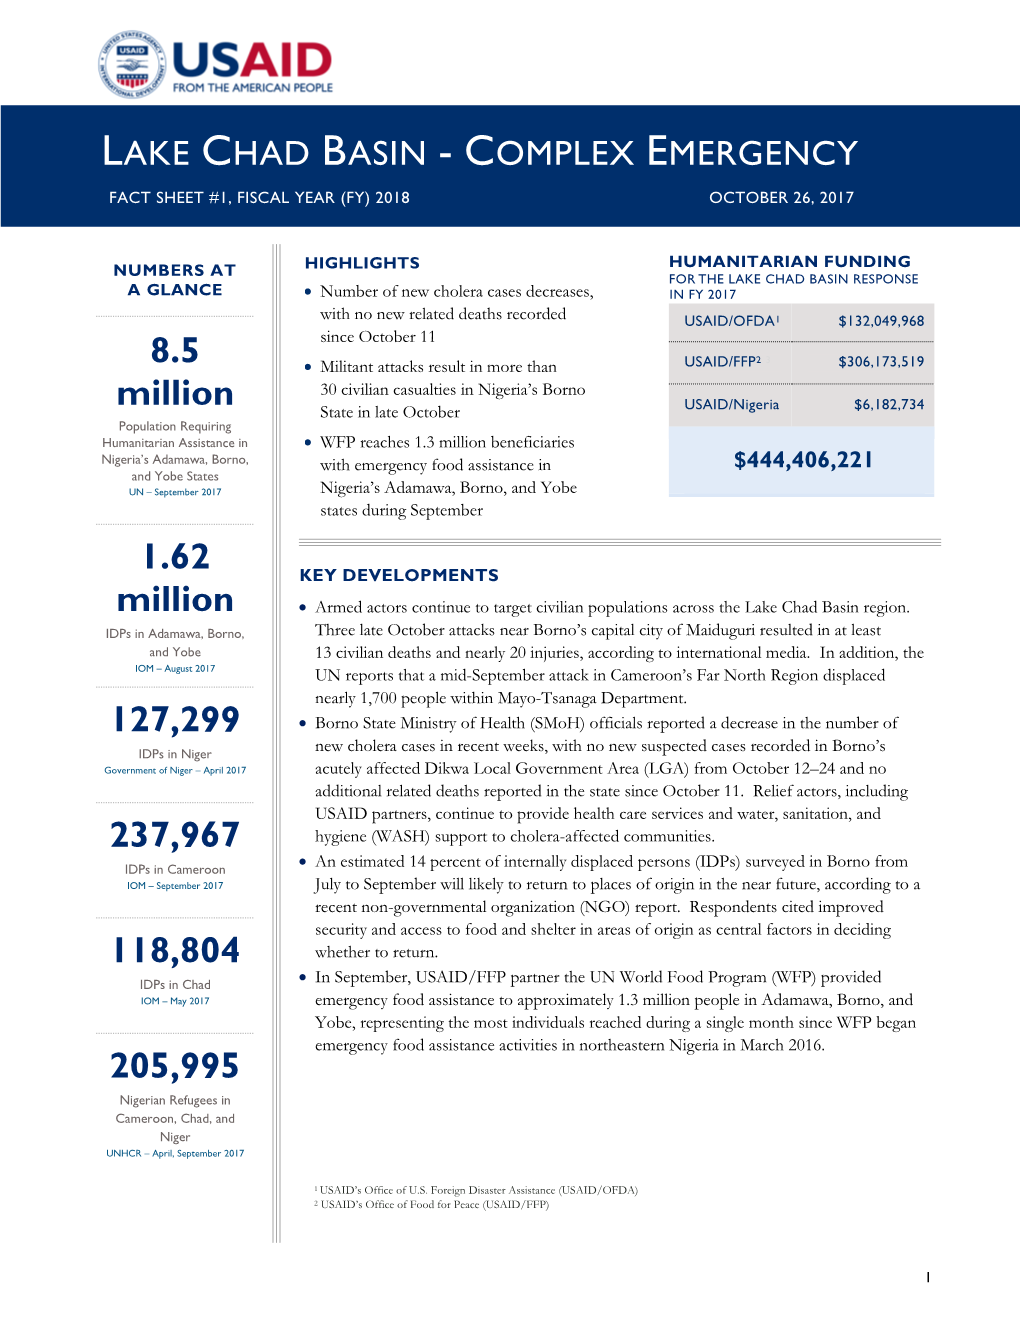 Lake Chad Basin Complex Emergency Fact Sheet #1